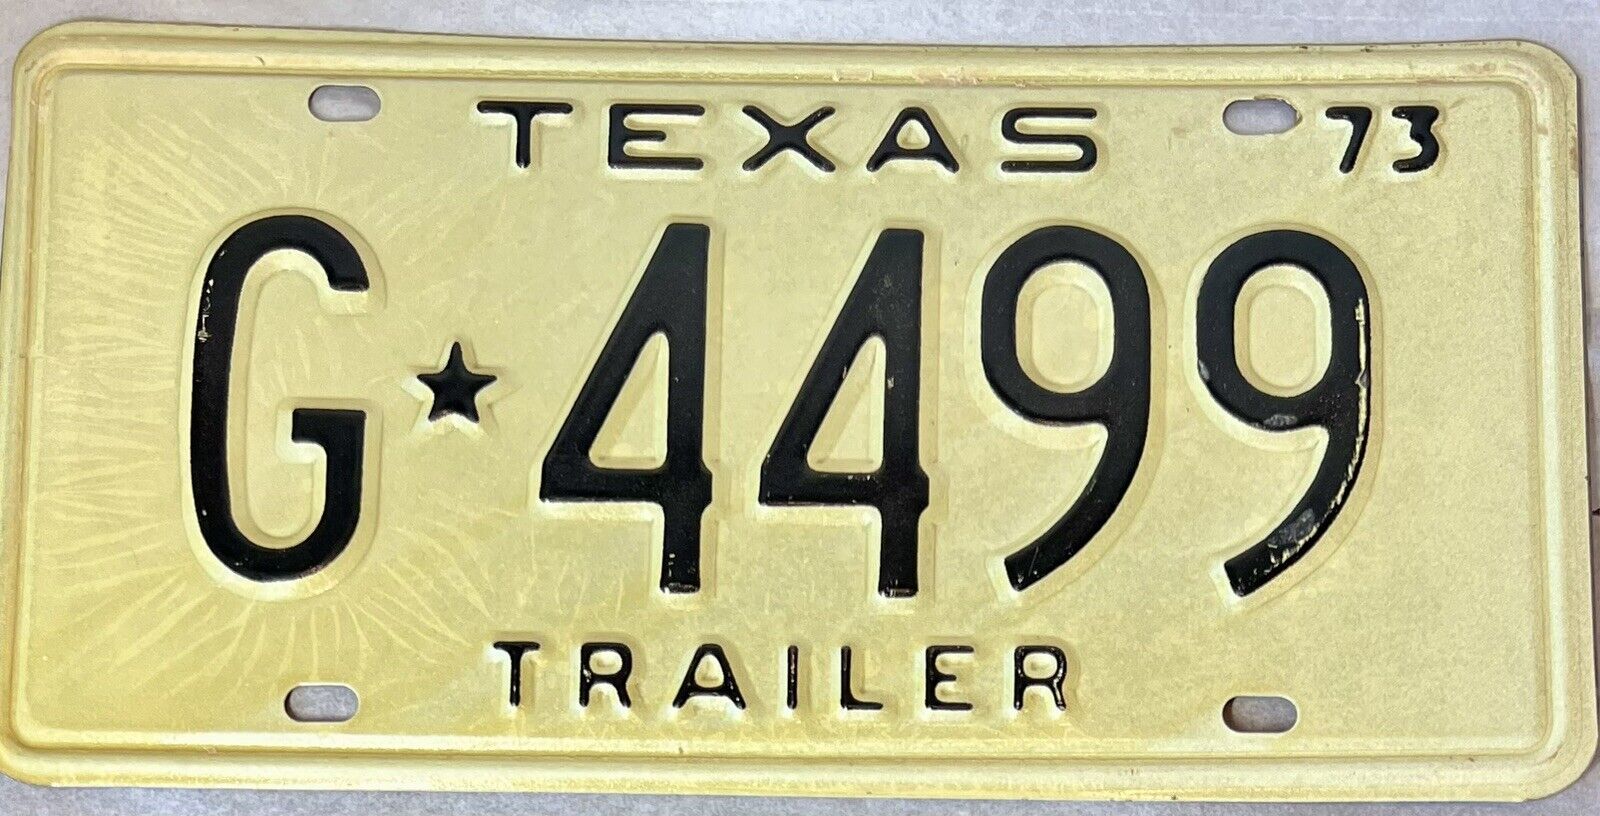 Vintage “Expired” NOS 1973 Texas Trailer License Plates  #G 4499  All Original Без бренда